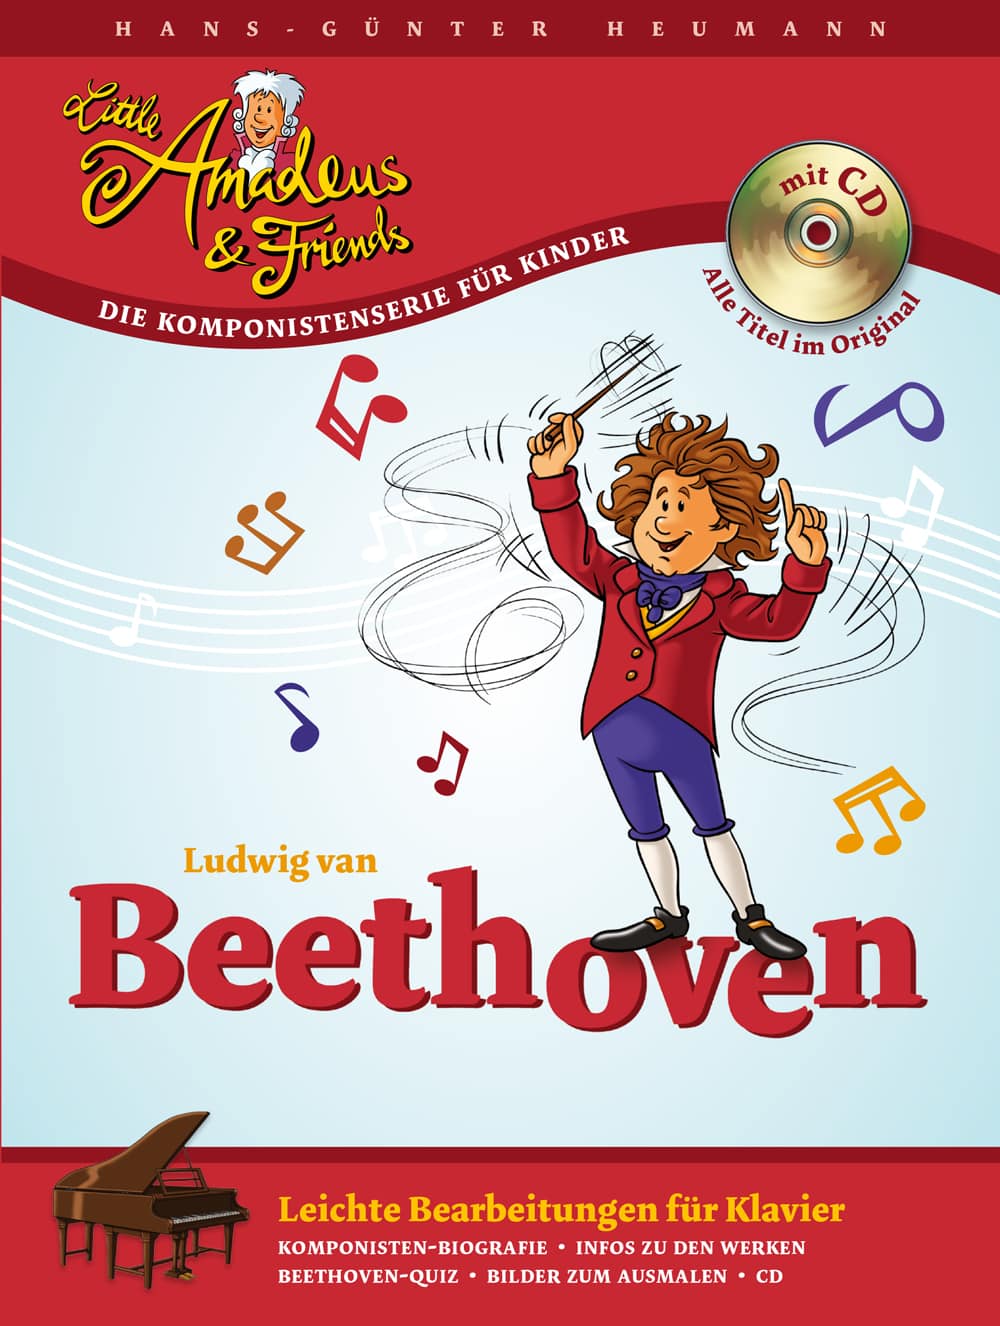 Little Amadeus & Friends: Beethoven